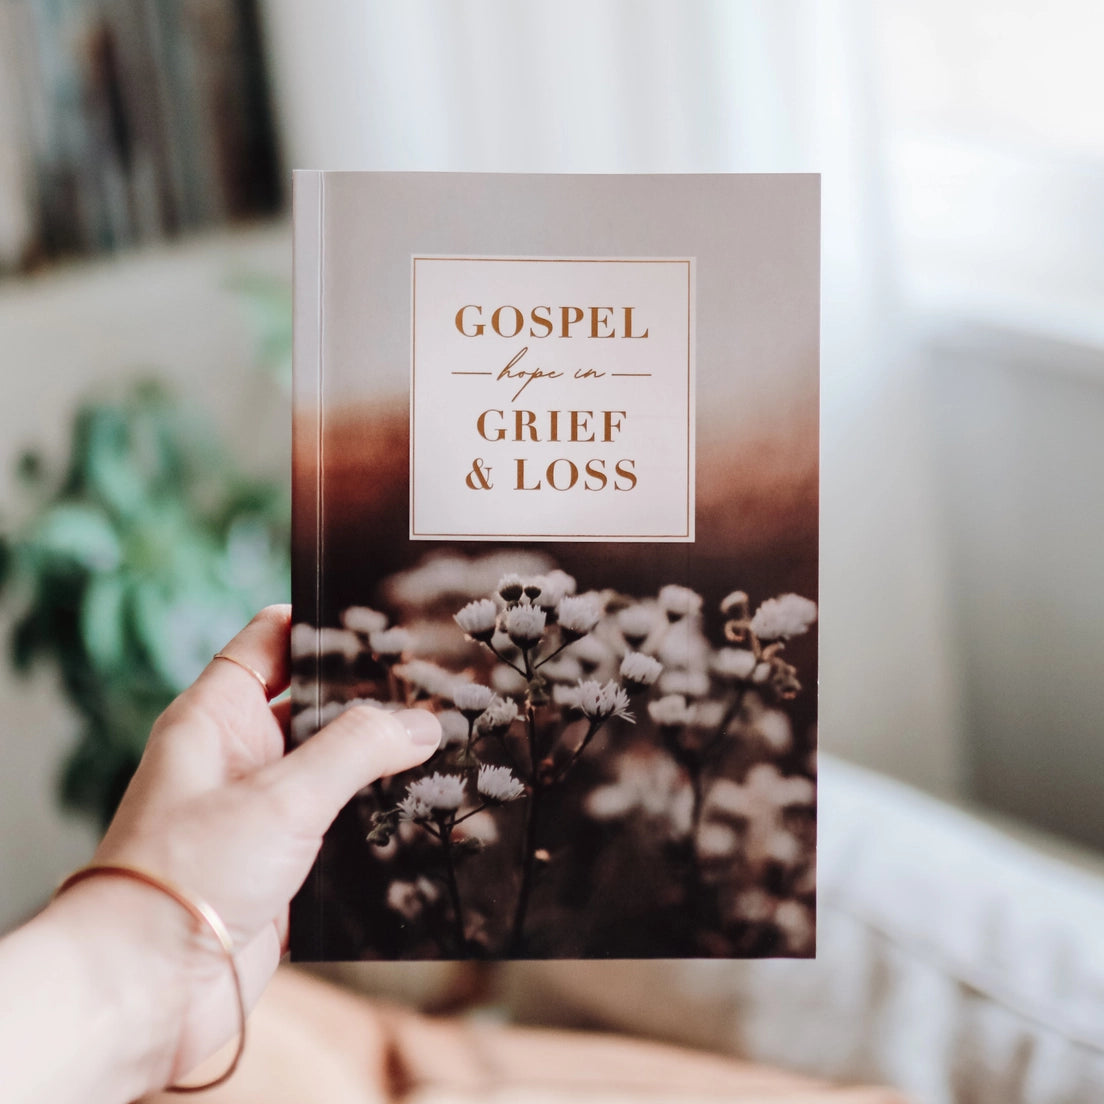 Gospel Hope In Grief & Loss